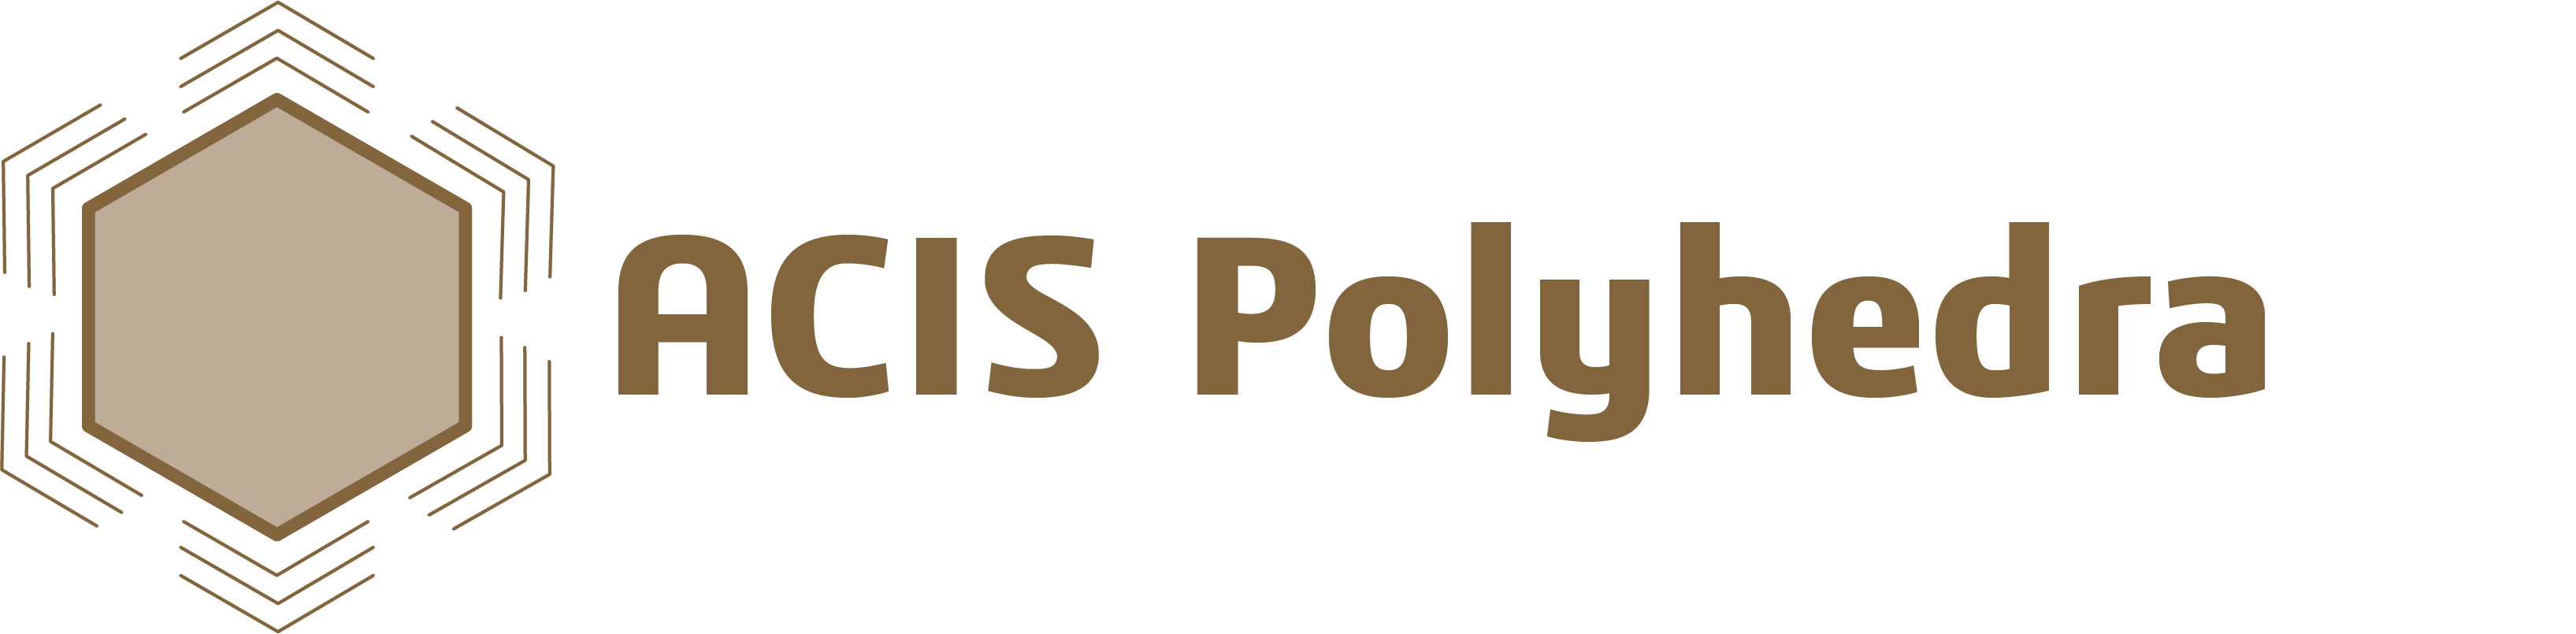 ACIS Polyhedra